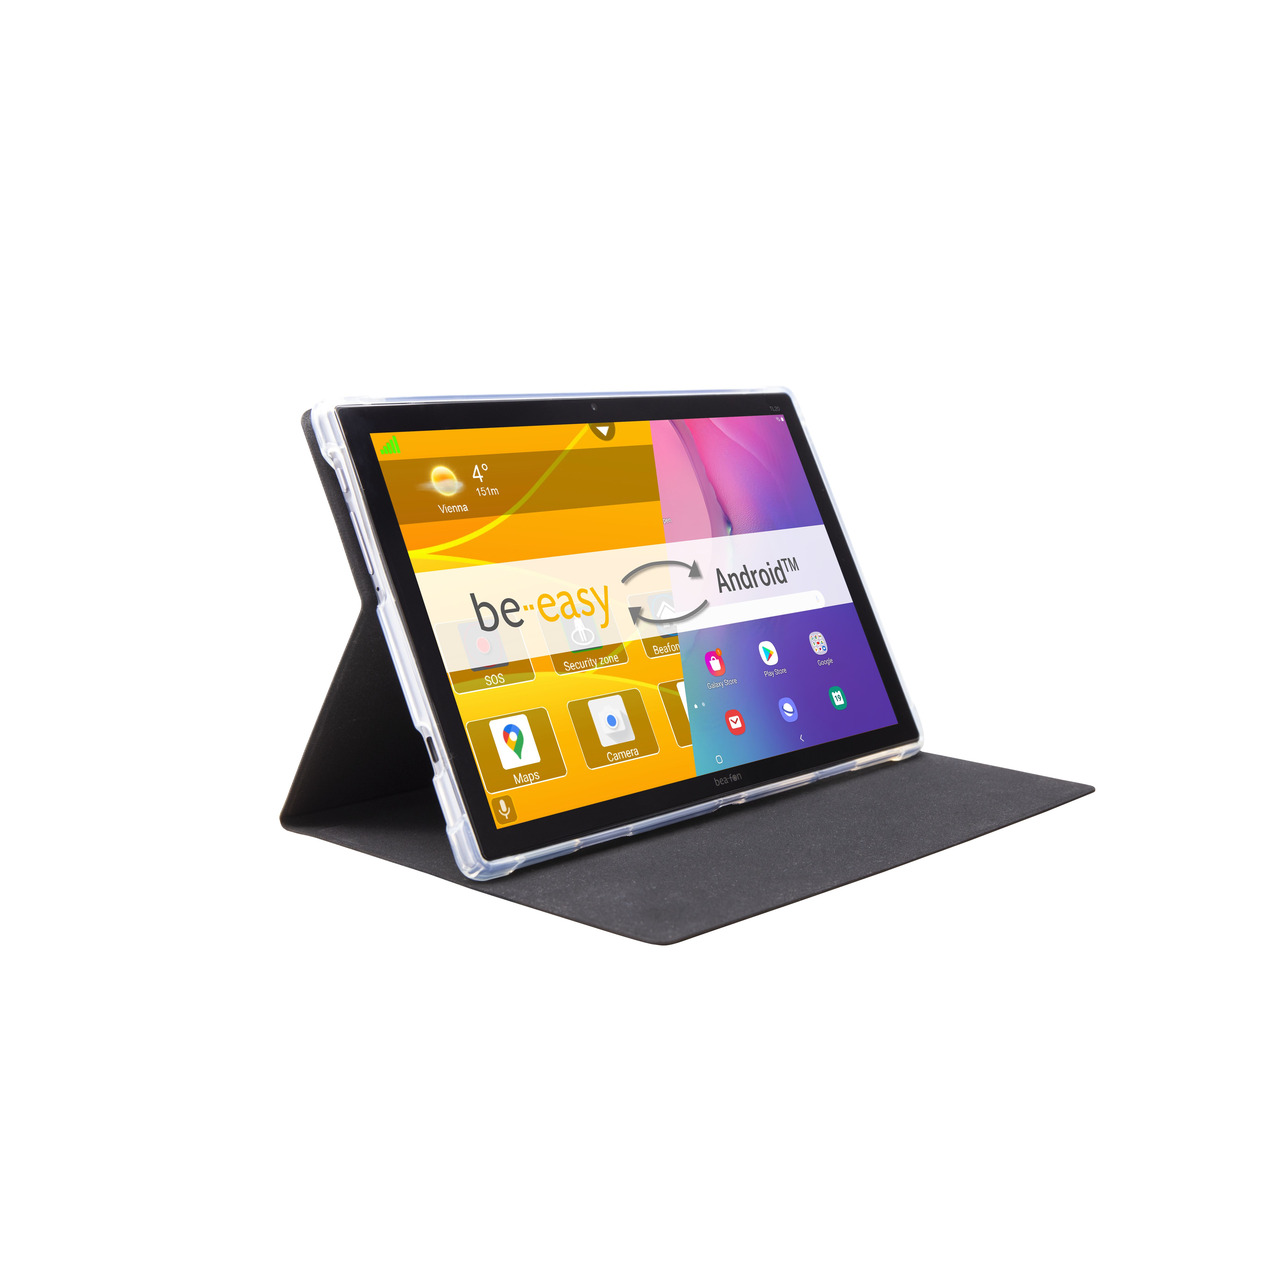 Bea-fon Senioren-Tablet TL20 Pro- 10-1- LTE- SOS-Knopf- Dual-OS be-easy und Android 11 unter PC-Hardware